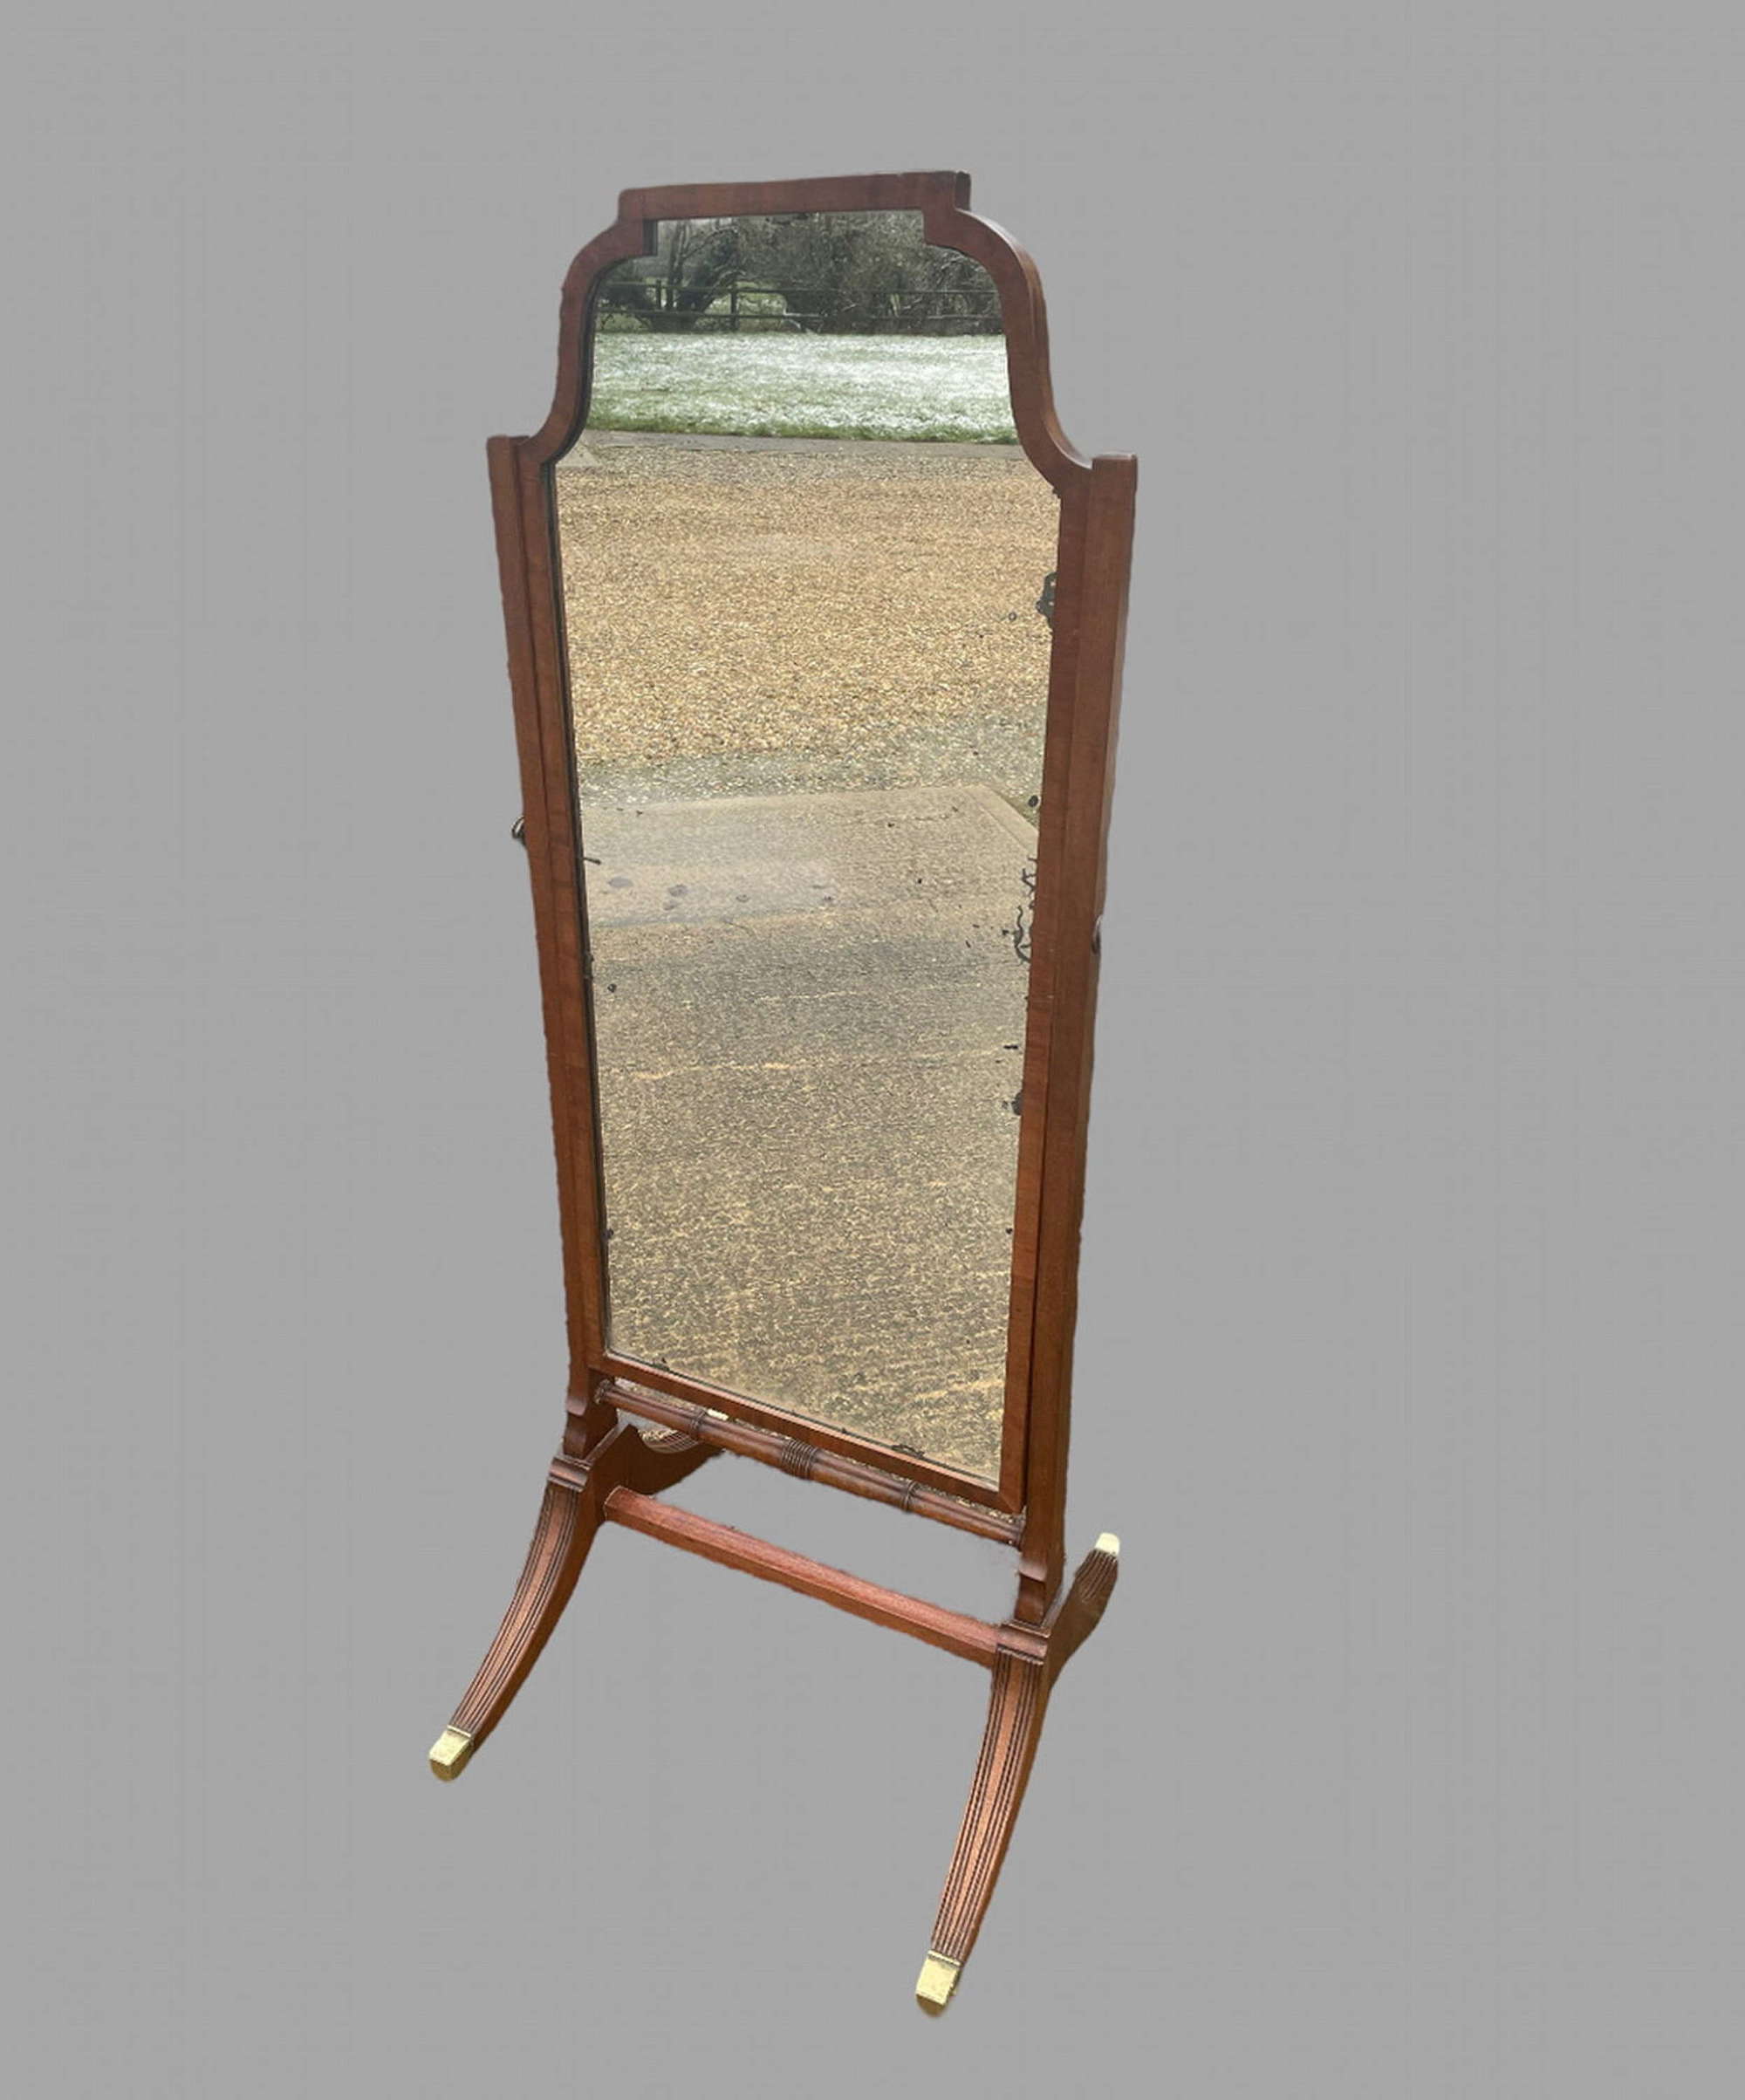 A c1900 Mahogany Framed Cheval Mirror